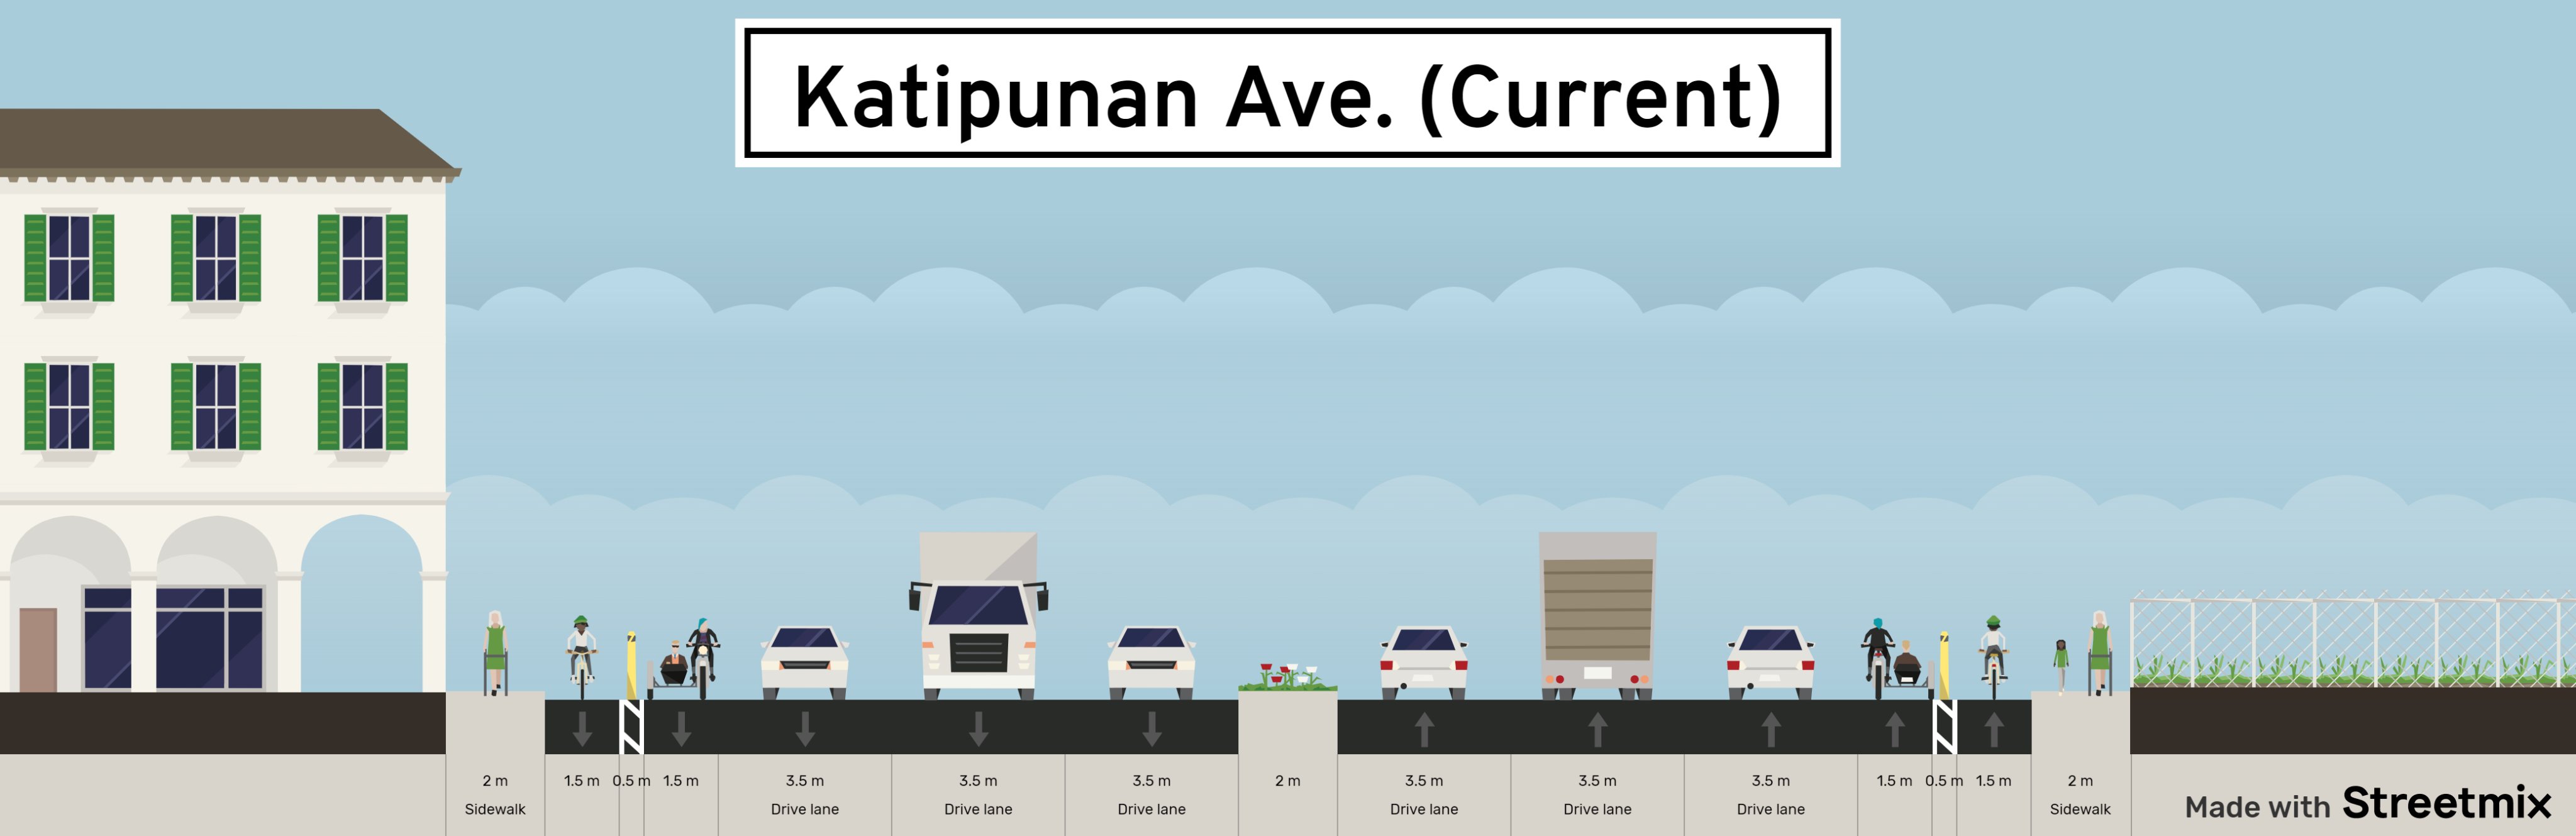 Katipunan Ave (Current)